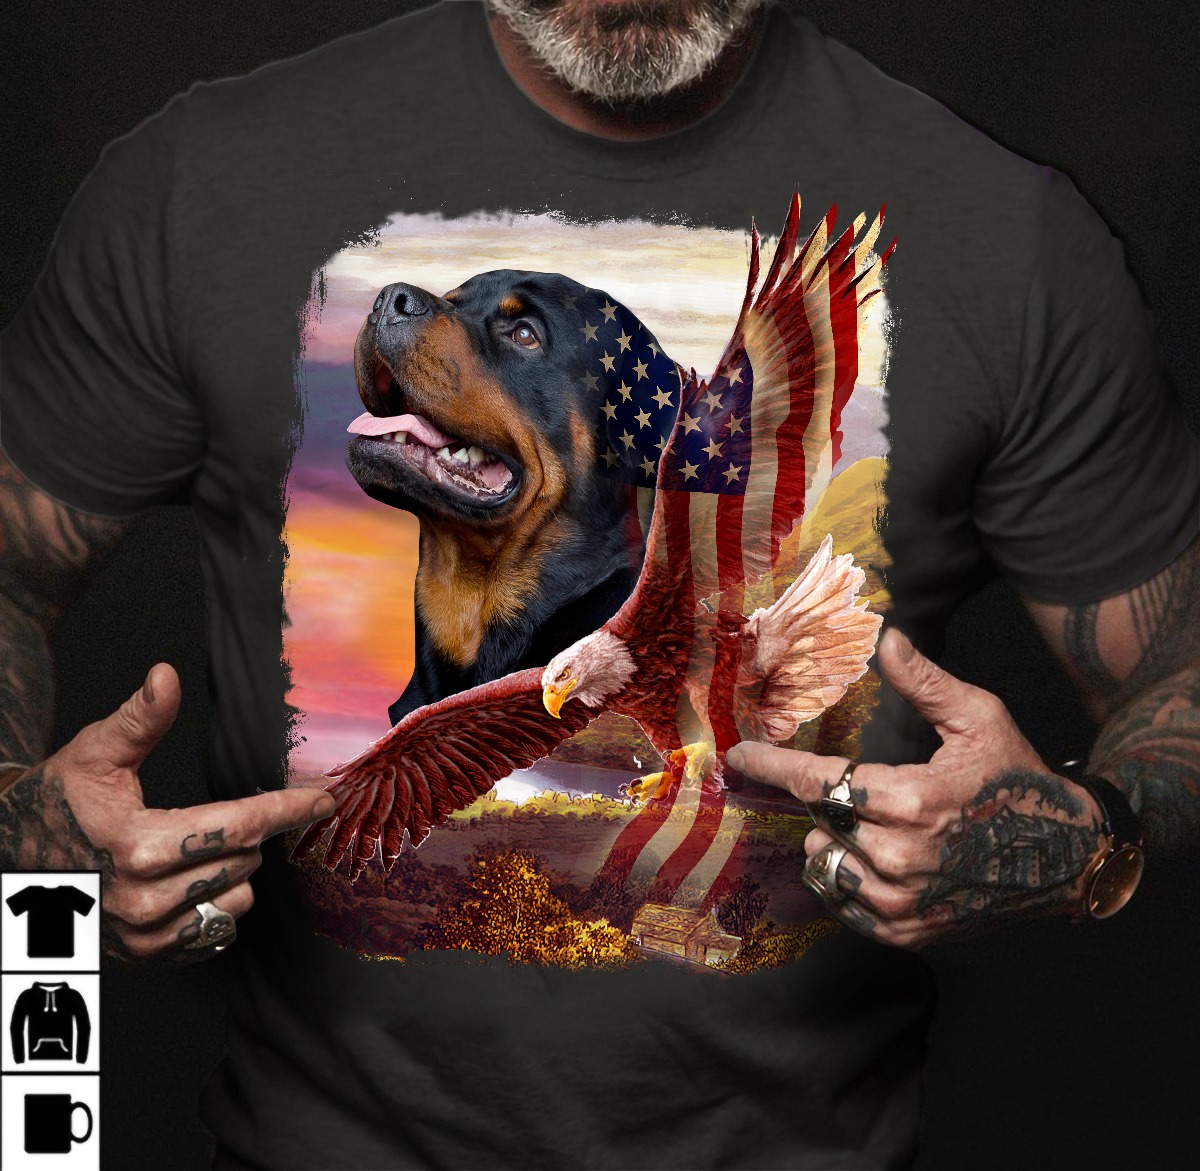 Rottweiler dog and eagle the symbol of America - America flag, dog lover